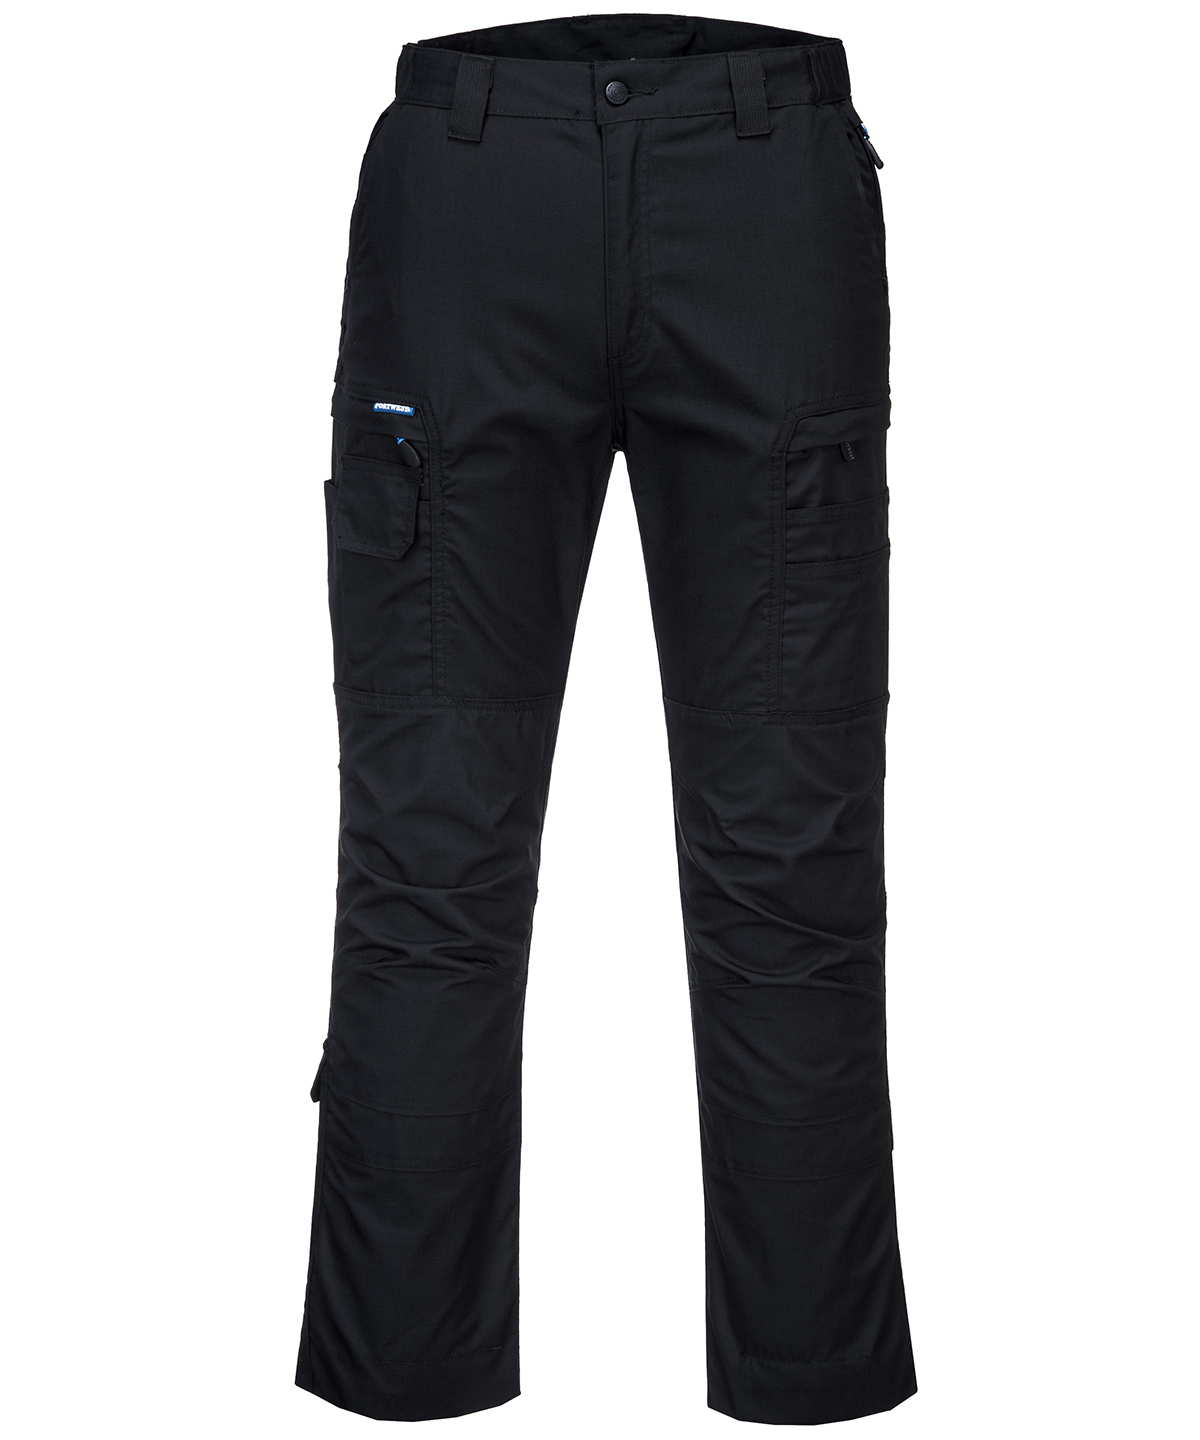 KX3 Ripstop trouser (T802) regular fit